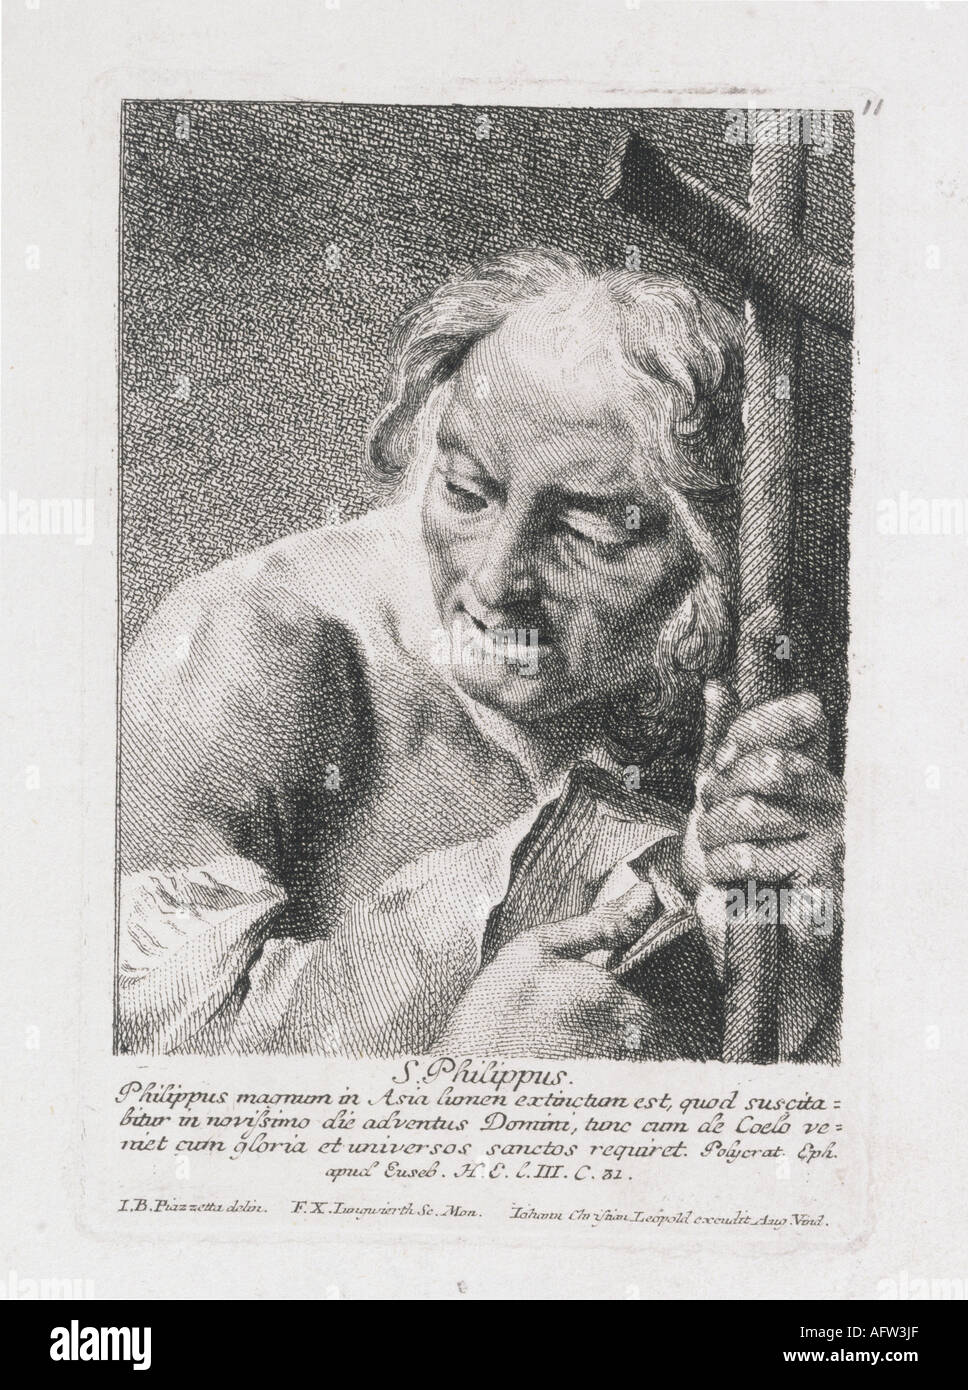 Philip, + 81, Apostle, Saint, portrait, engraving by Johann Christian Leopold, Augsburg, 18th century,  religion, christianity, Saints, martyr, cross, , Stock Photo